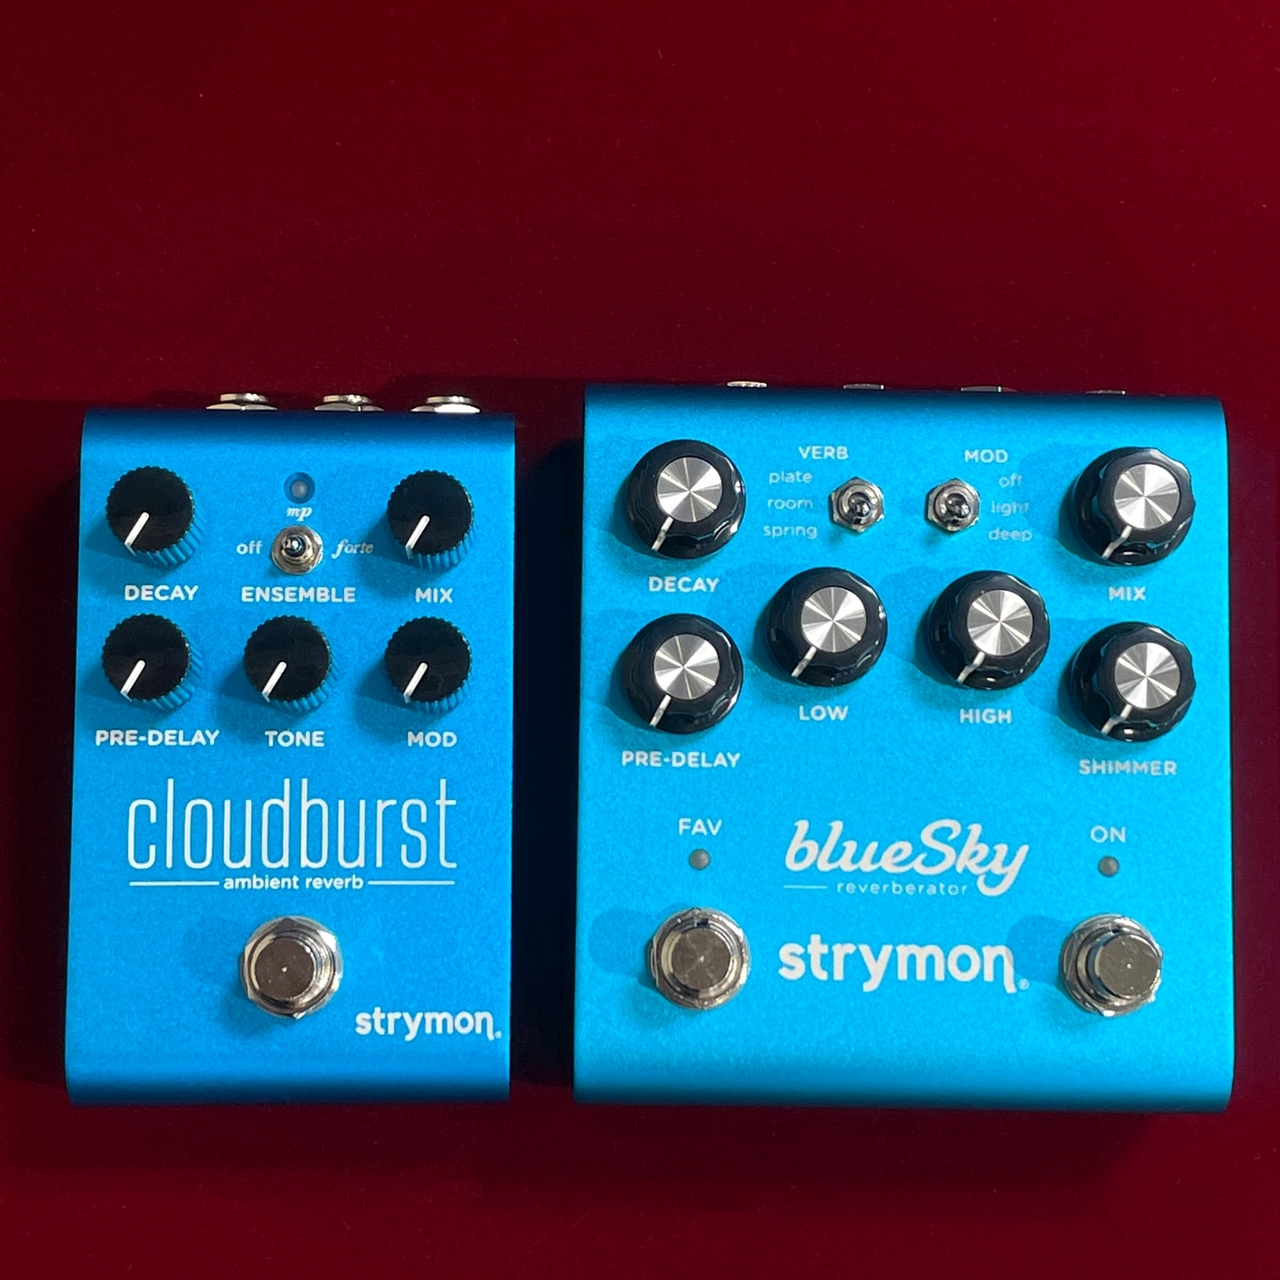 strymon Cloudburst 【次世代アンビエントリバーブ】【送料無料